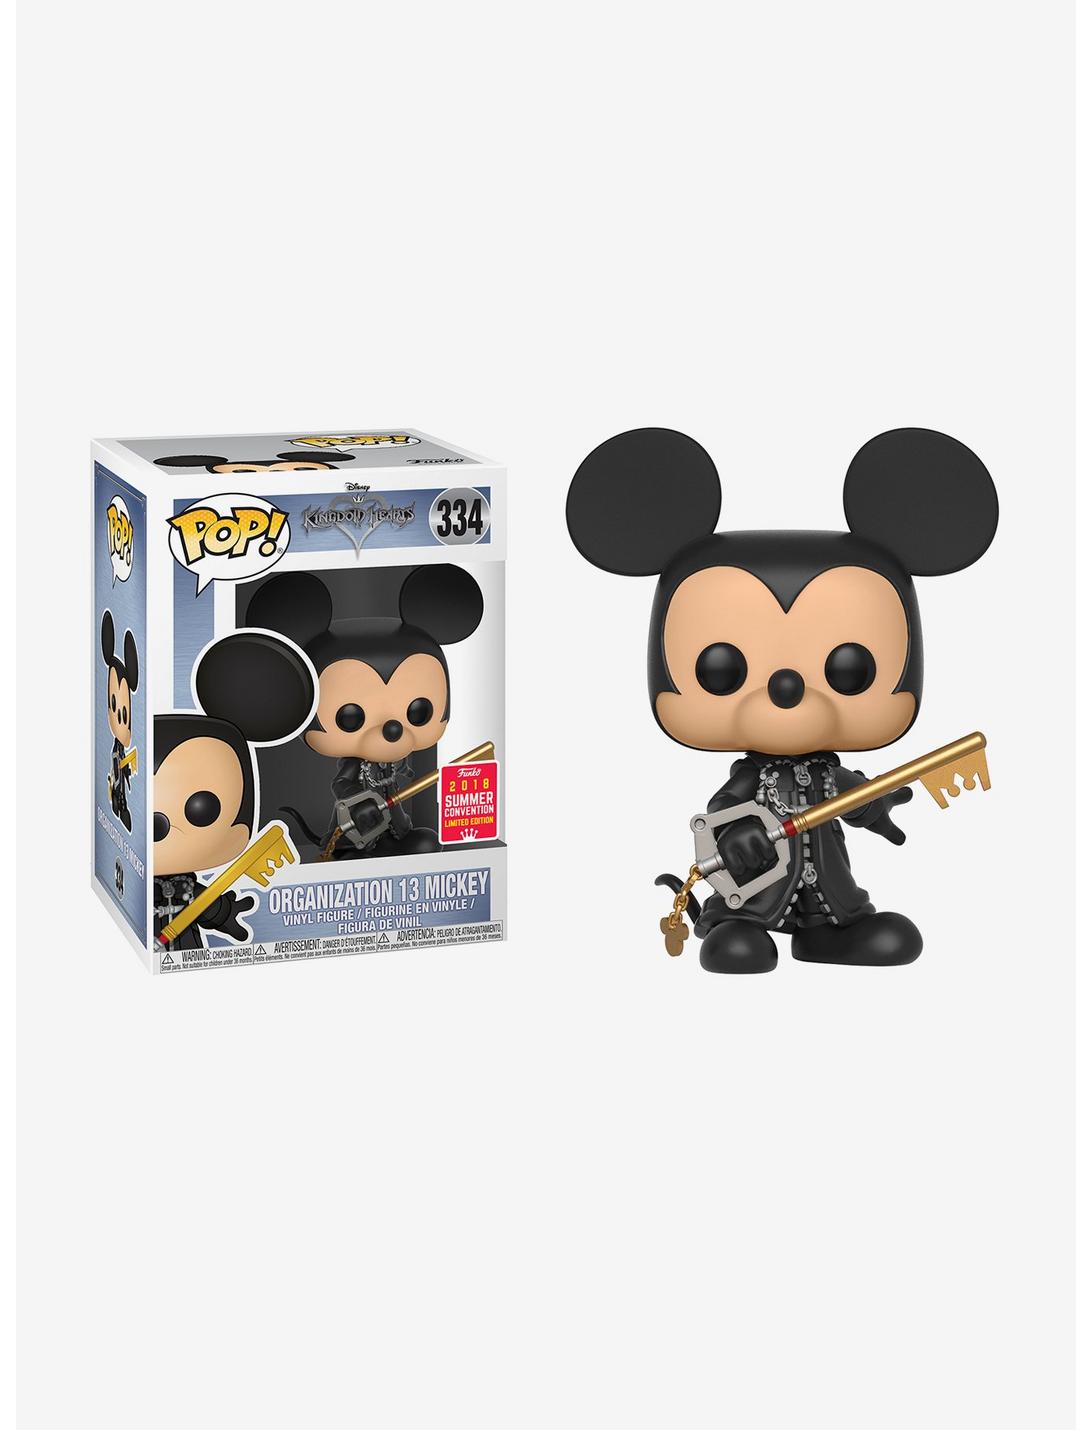 Funko Pop! Disney Kingdom Hearts Unhooded Organization 13 Mickey Mouse Vinyl Figure - 2018 Summer Convention Exclusive, , hi-res